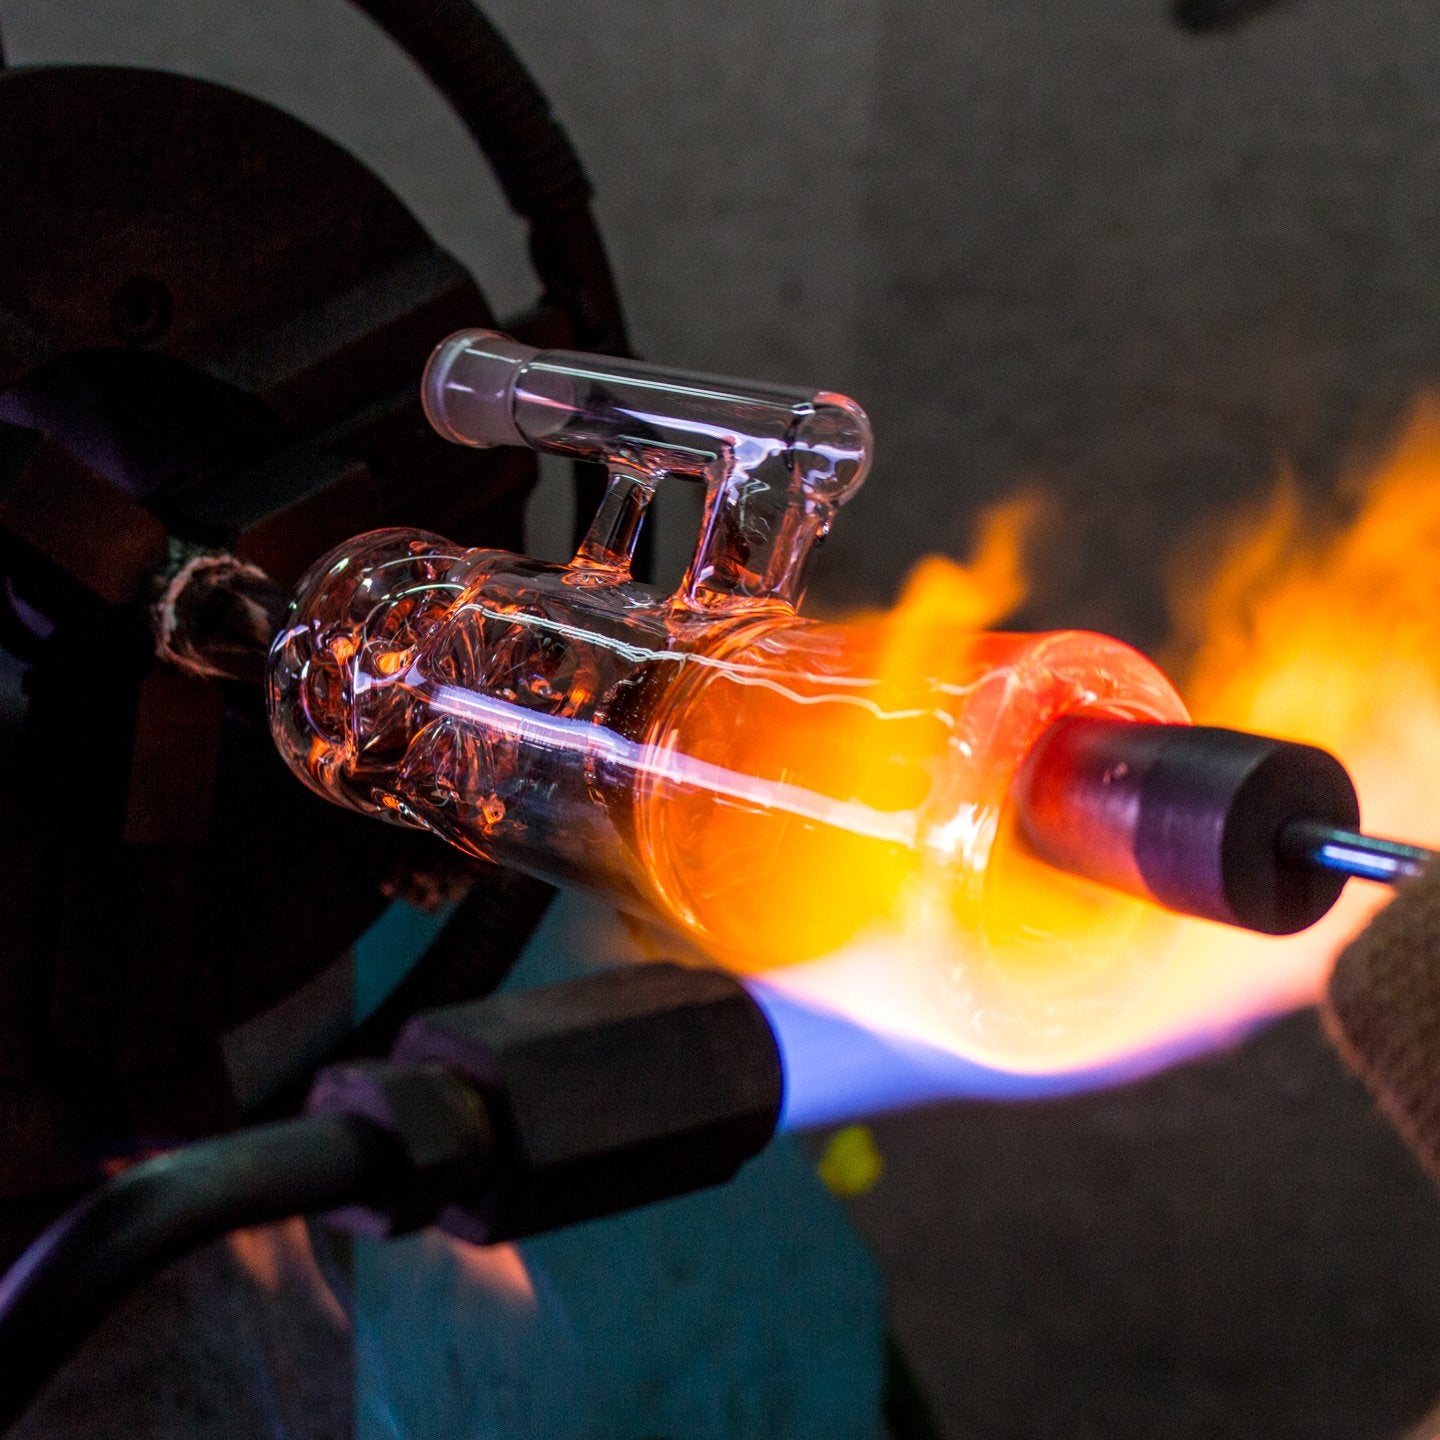 Pipe Maker's Glass Blowing Starter Kit - Bobcat Torch